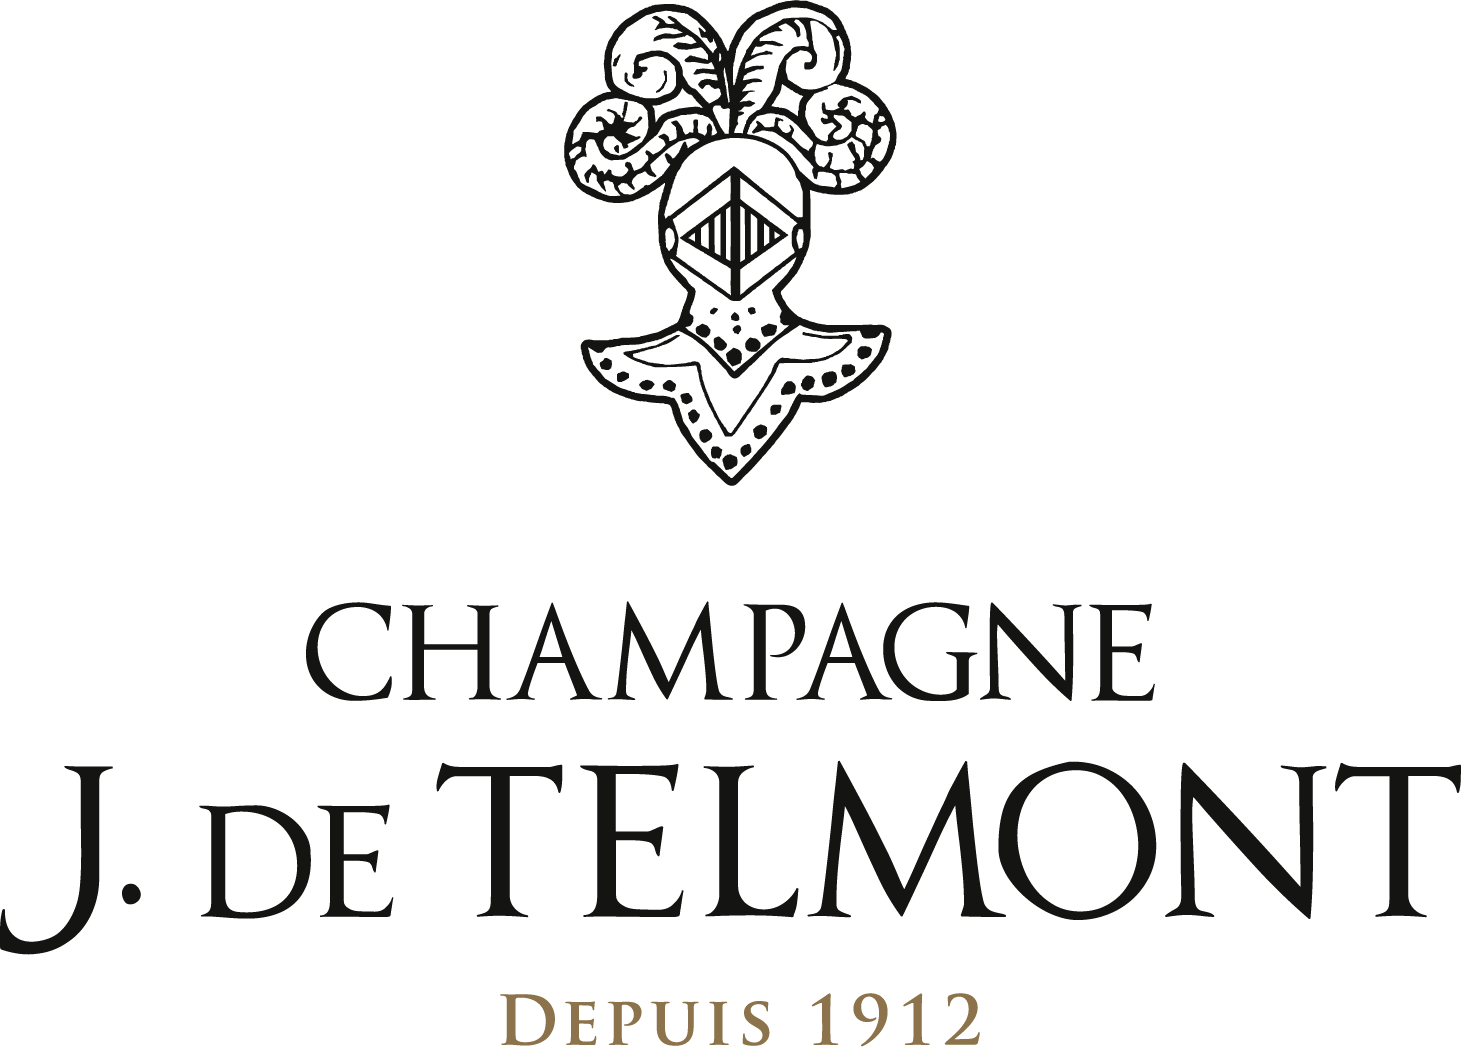 J. De Telmont